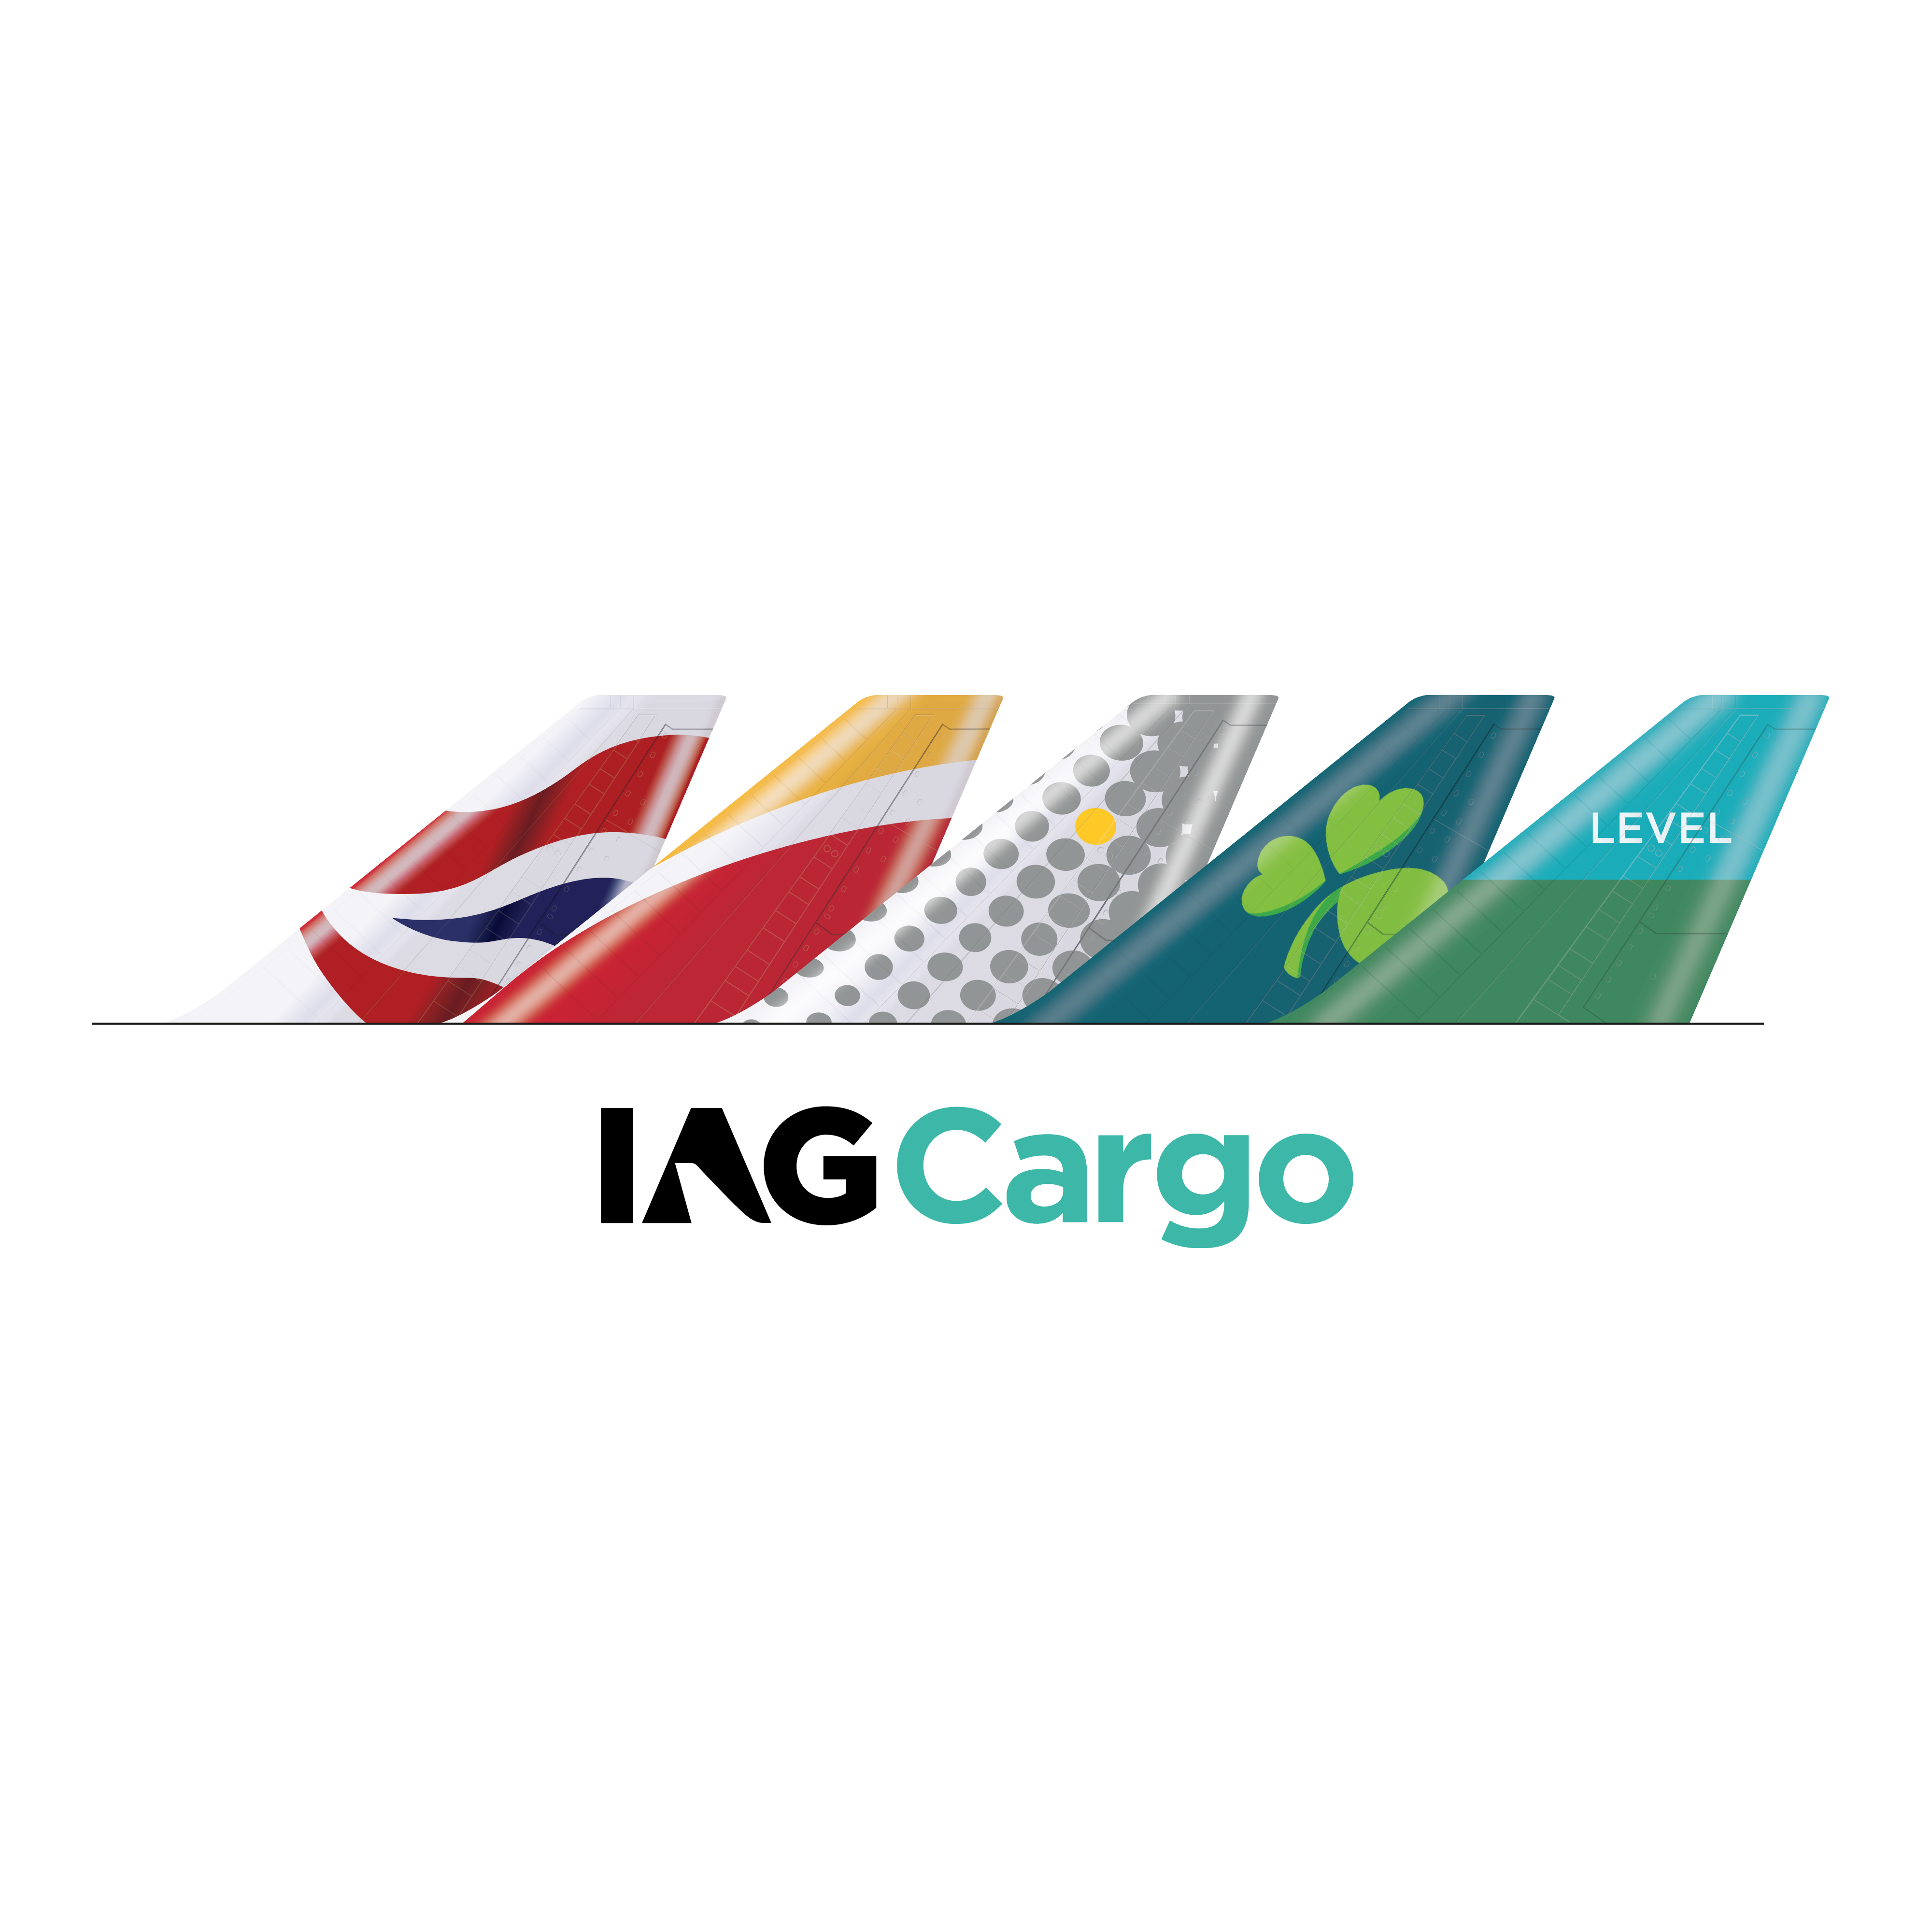 IAG Cargo renews for CHAMP’s Traxon cargoHUB service